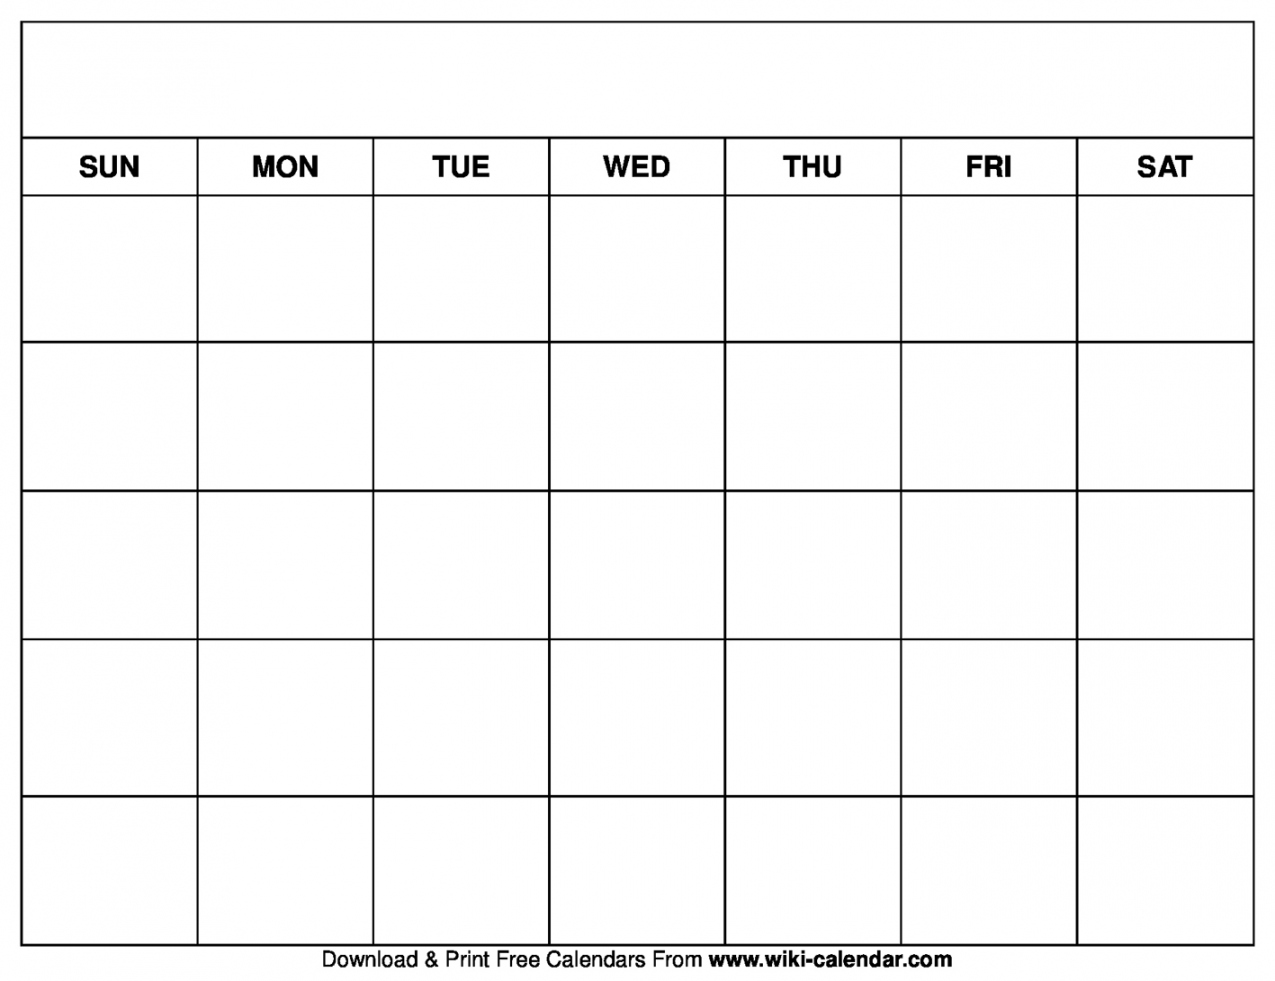 Free Blank Calendar Printable - Printable - Printable Blank Calendar Templates - Wiki Calendar